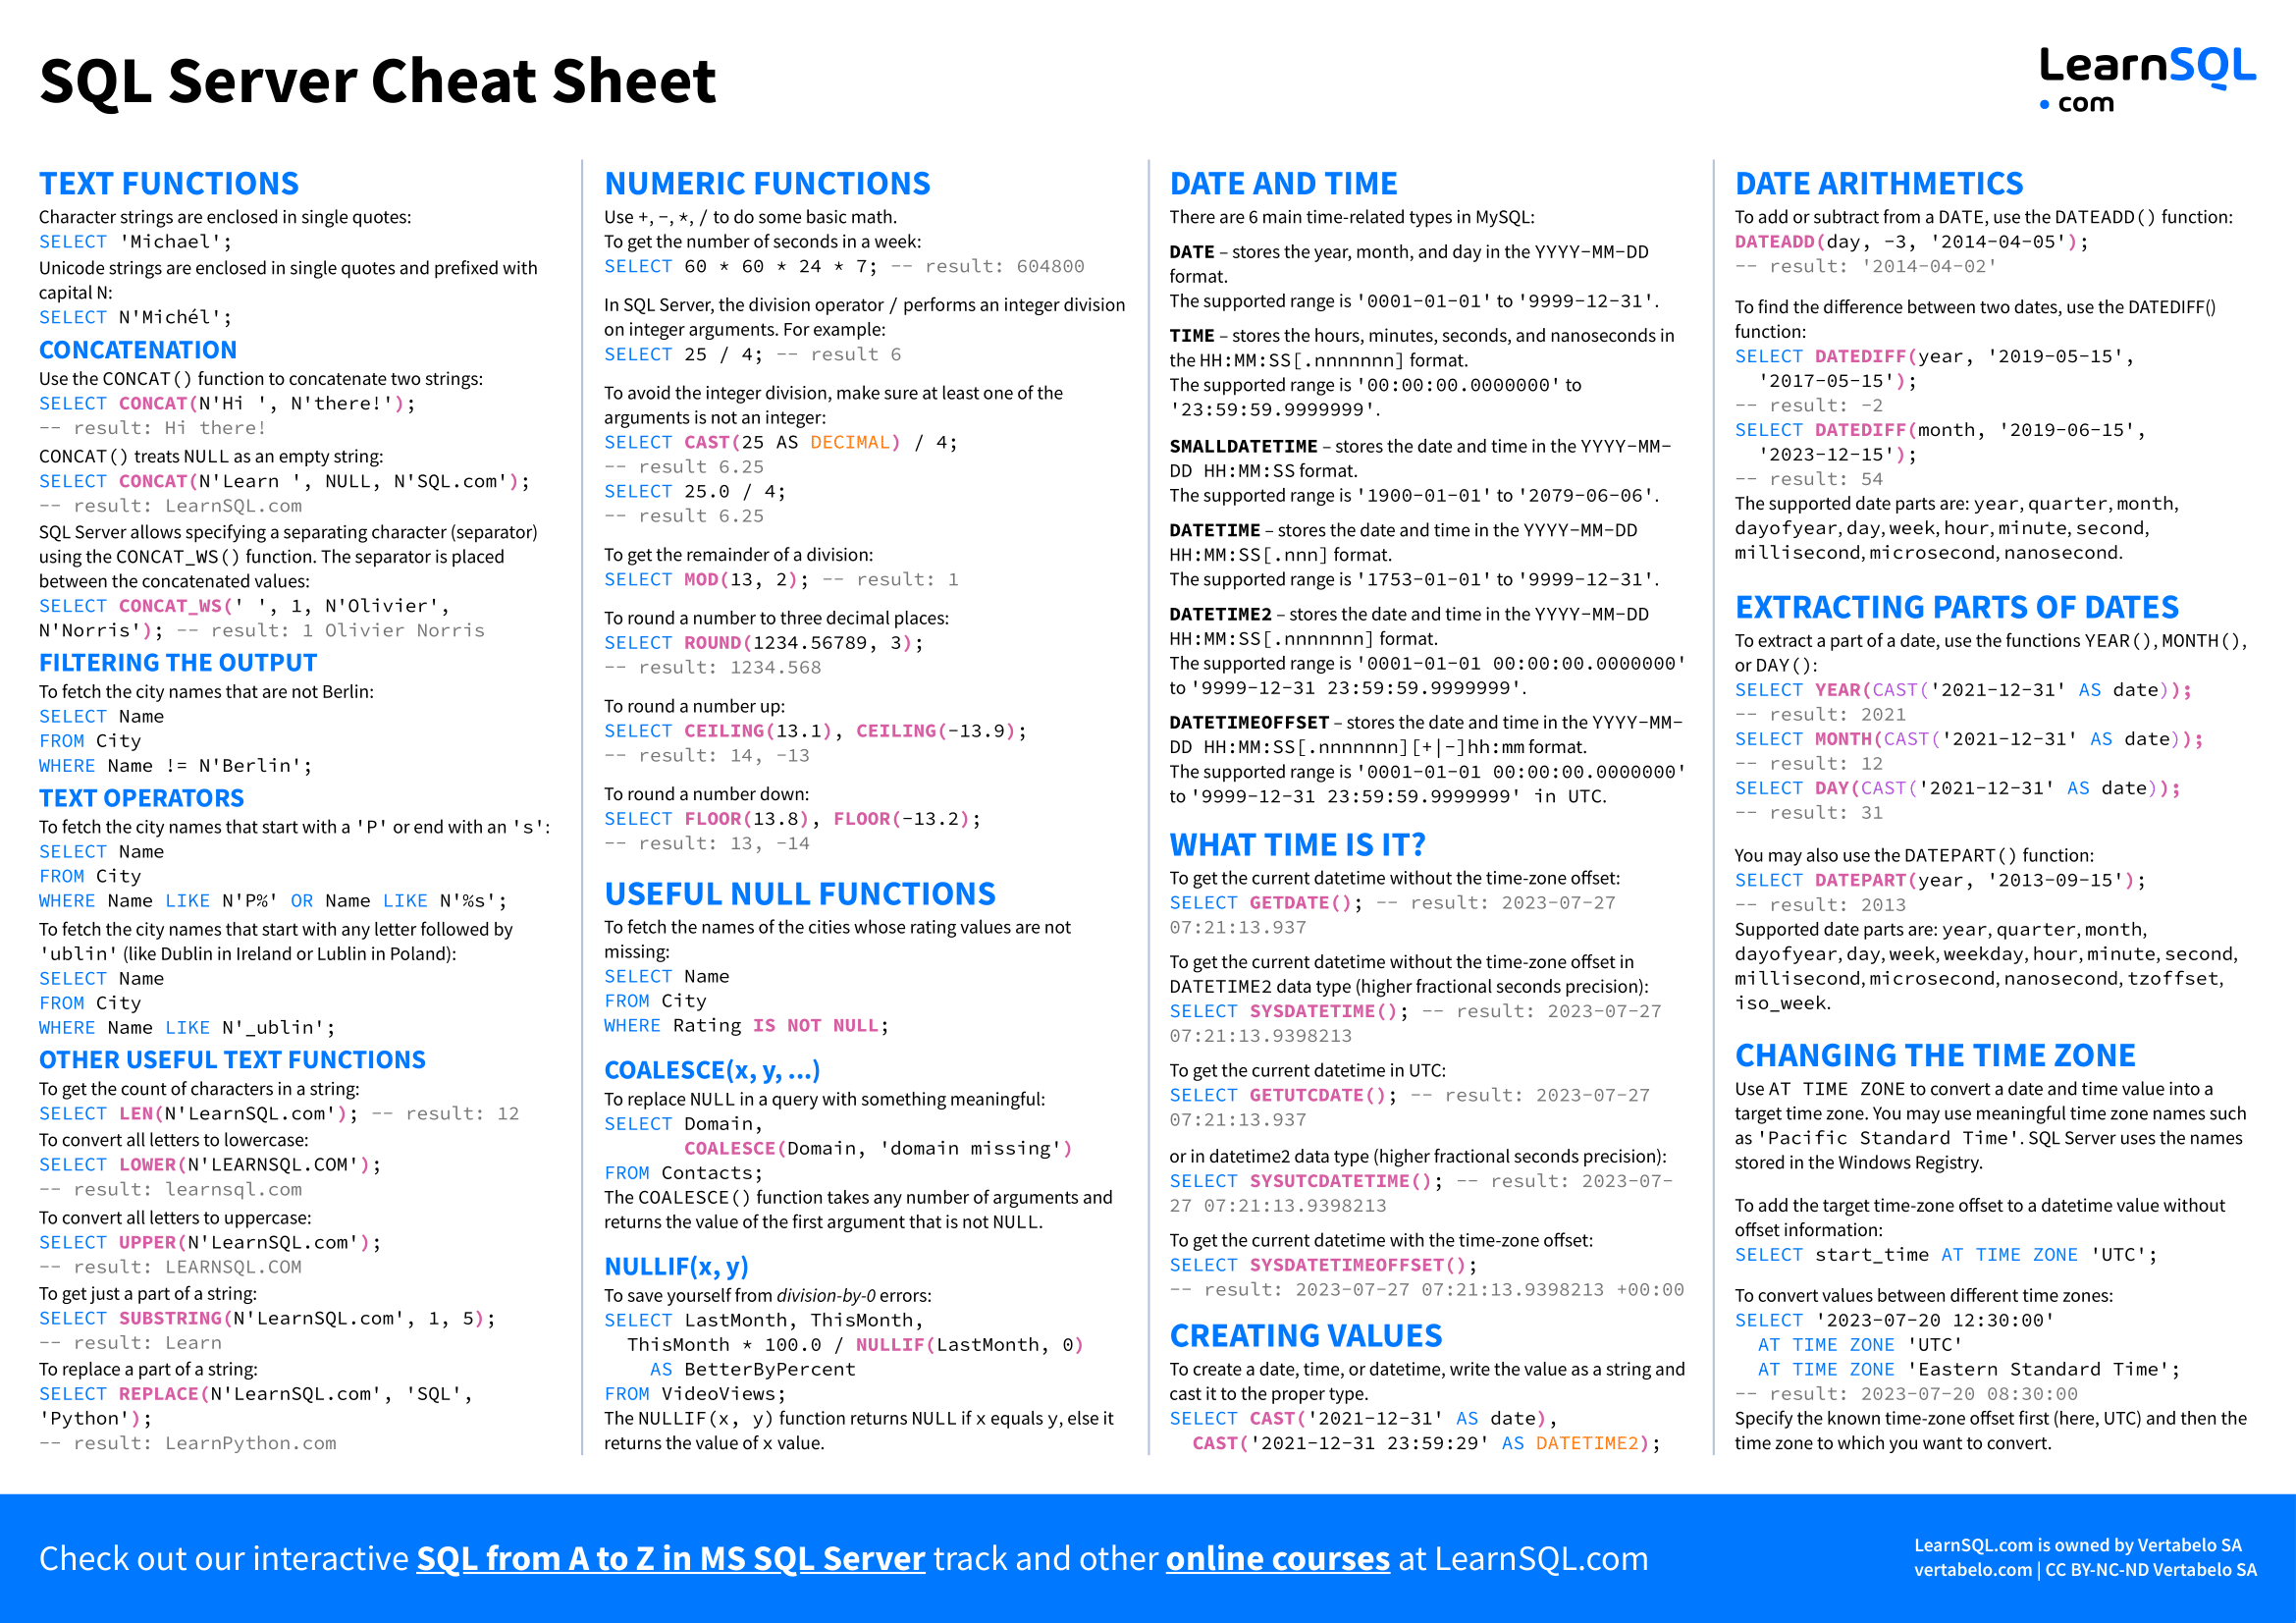 https://learnsql.com/blog/sql-server-cheat-sheet/sql-server-cheat-sheet-a4-page-2.png